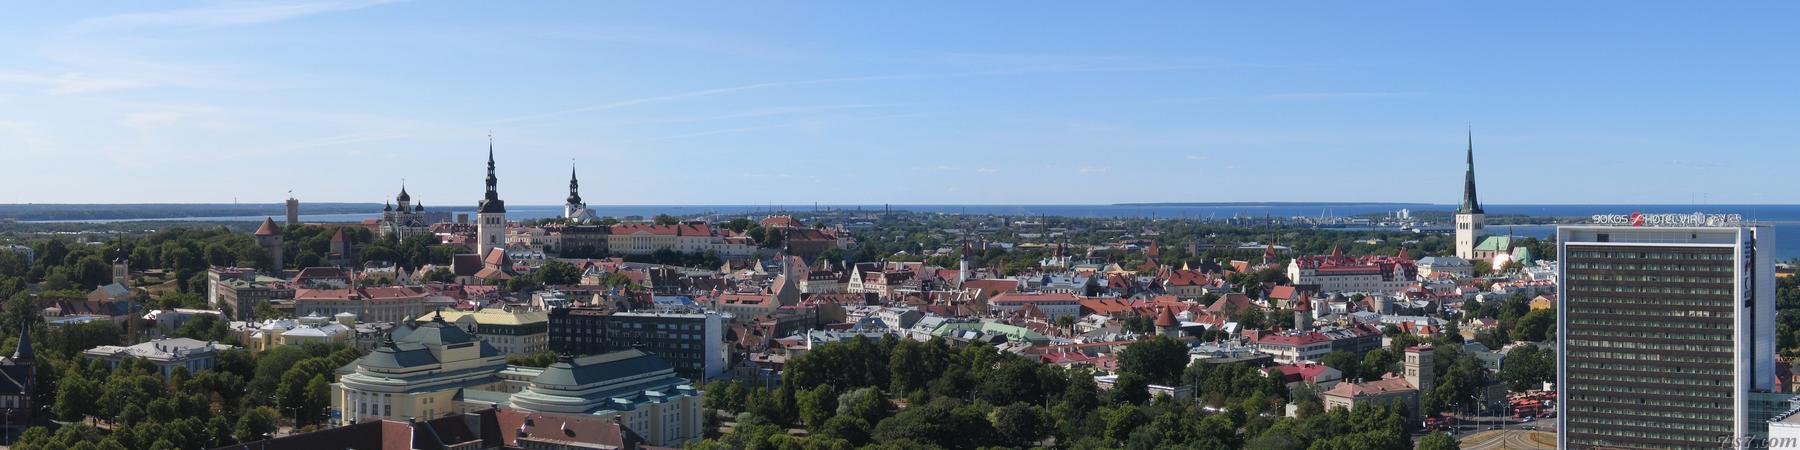 Tallinn's Old Town seen from the Radisson hotel.